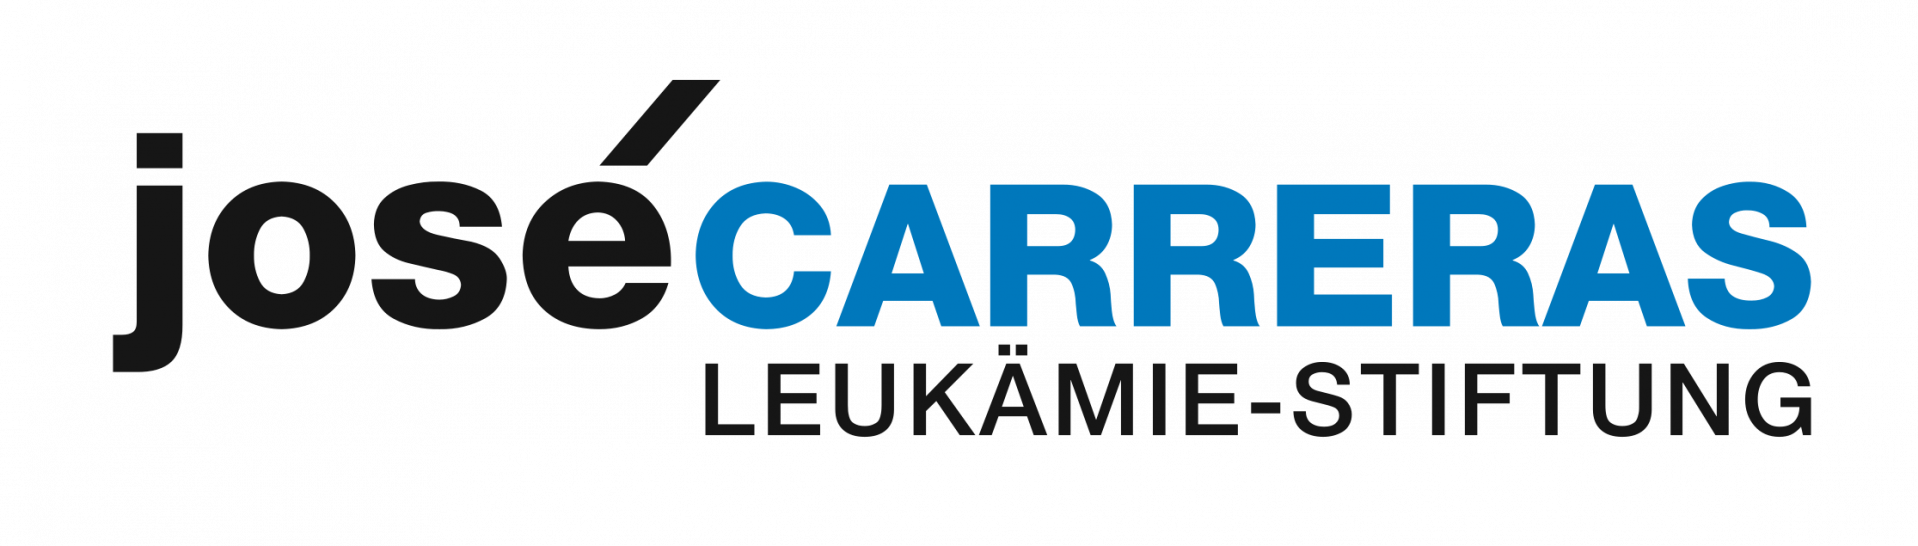 Deutsche José Carreras Leukämie Stiftung 